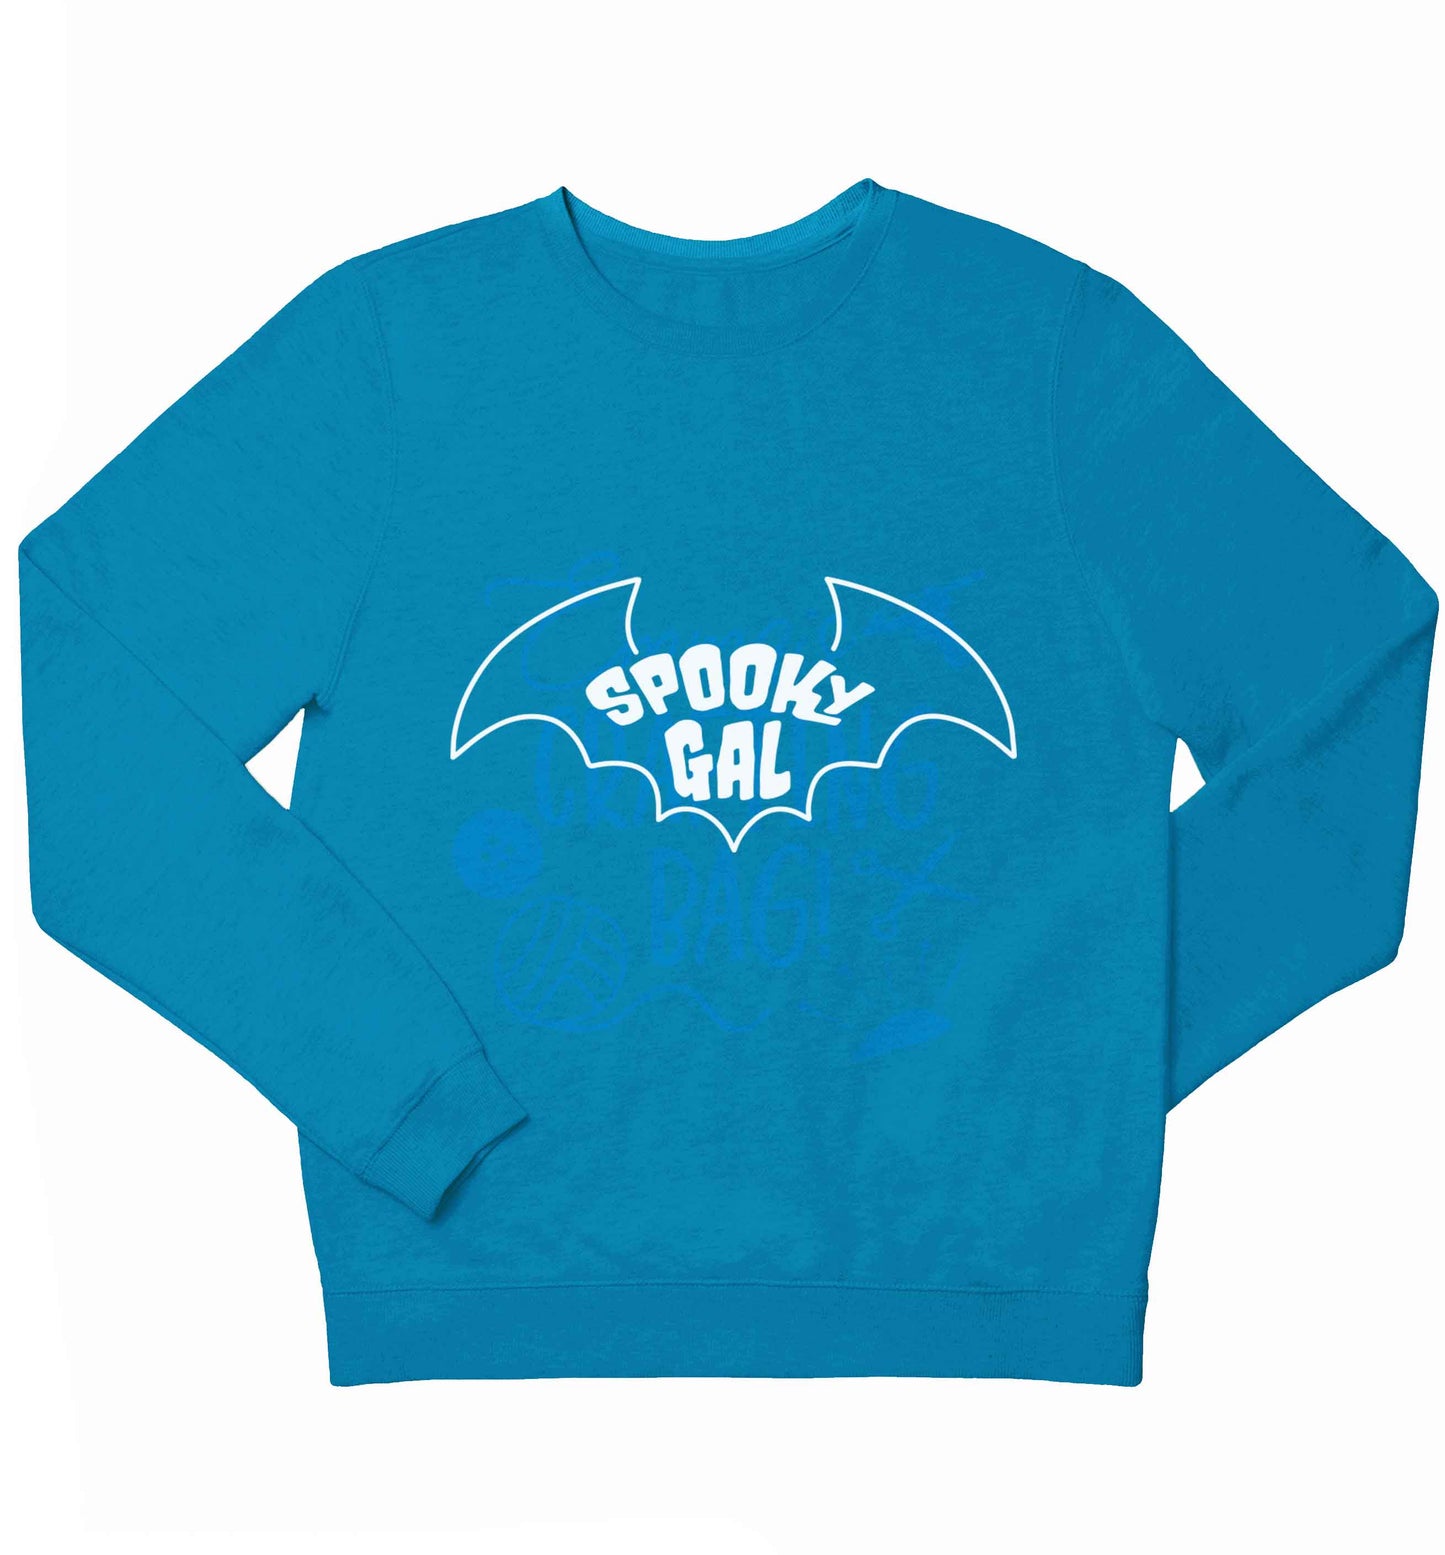 Spooky gal Kit children's blue sweater 12-13 Years